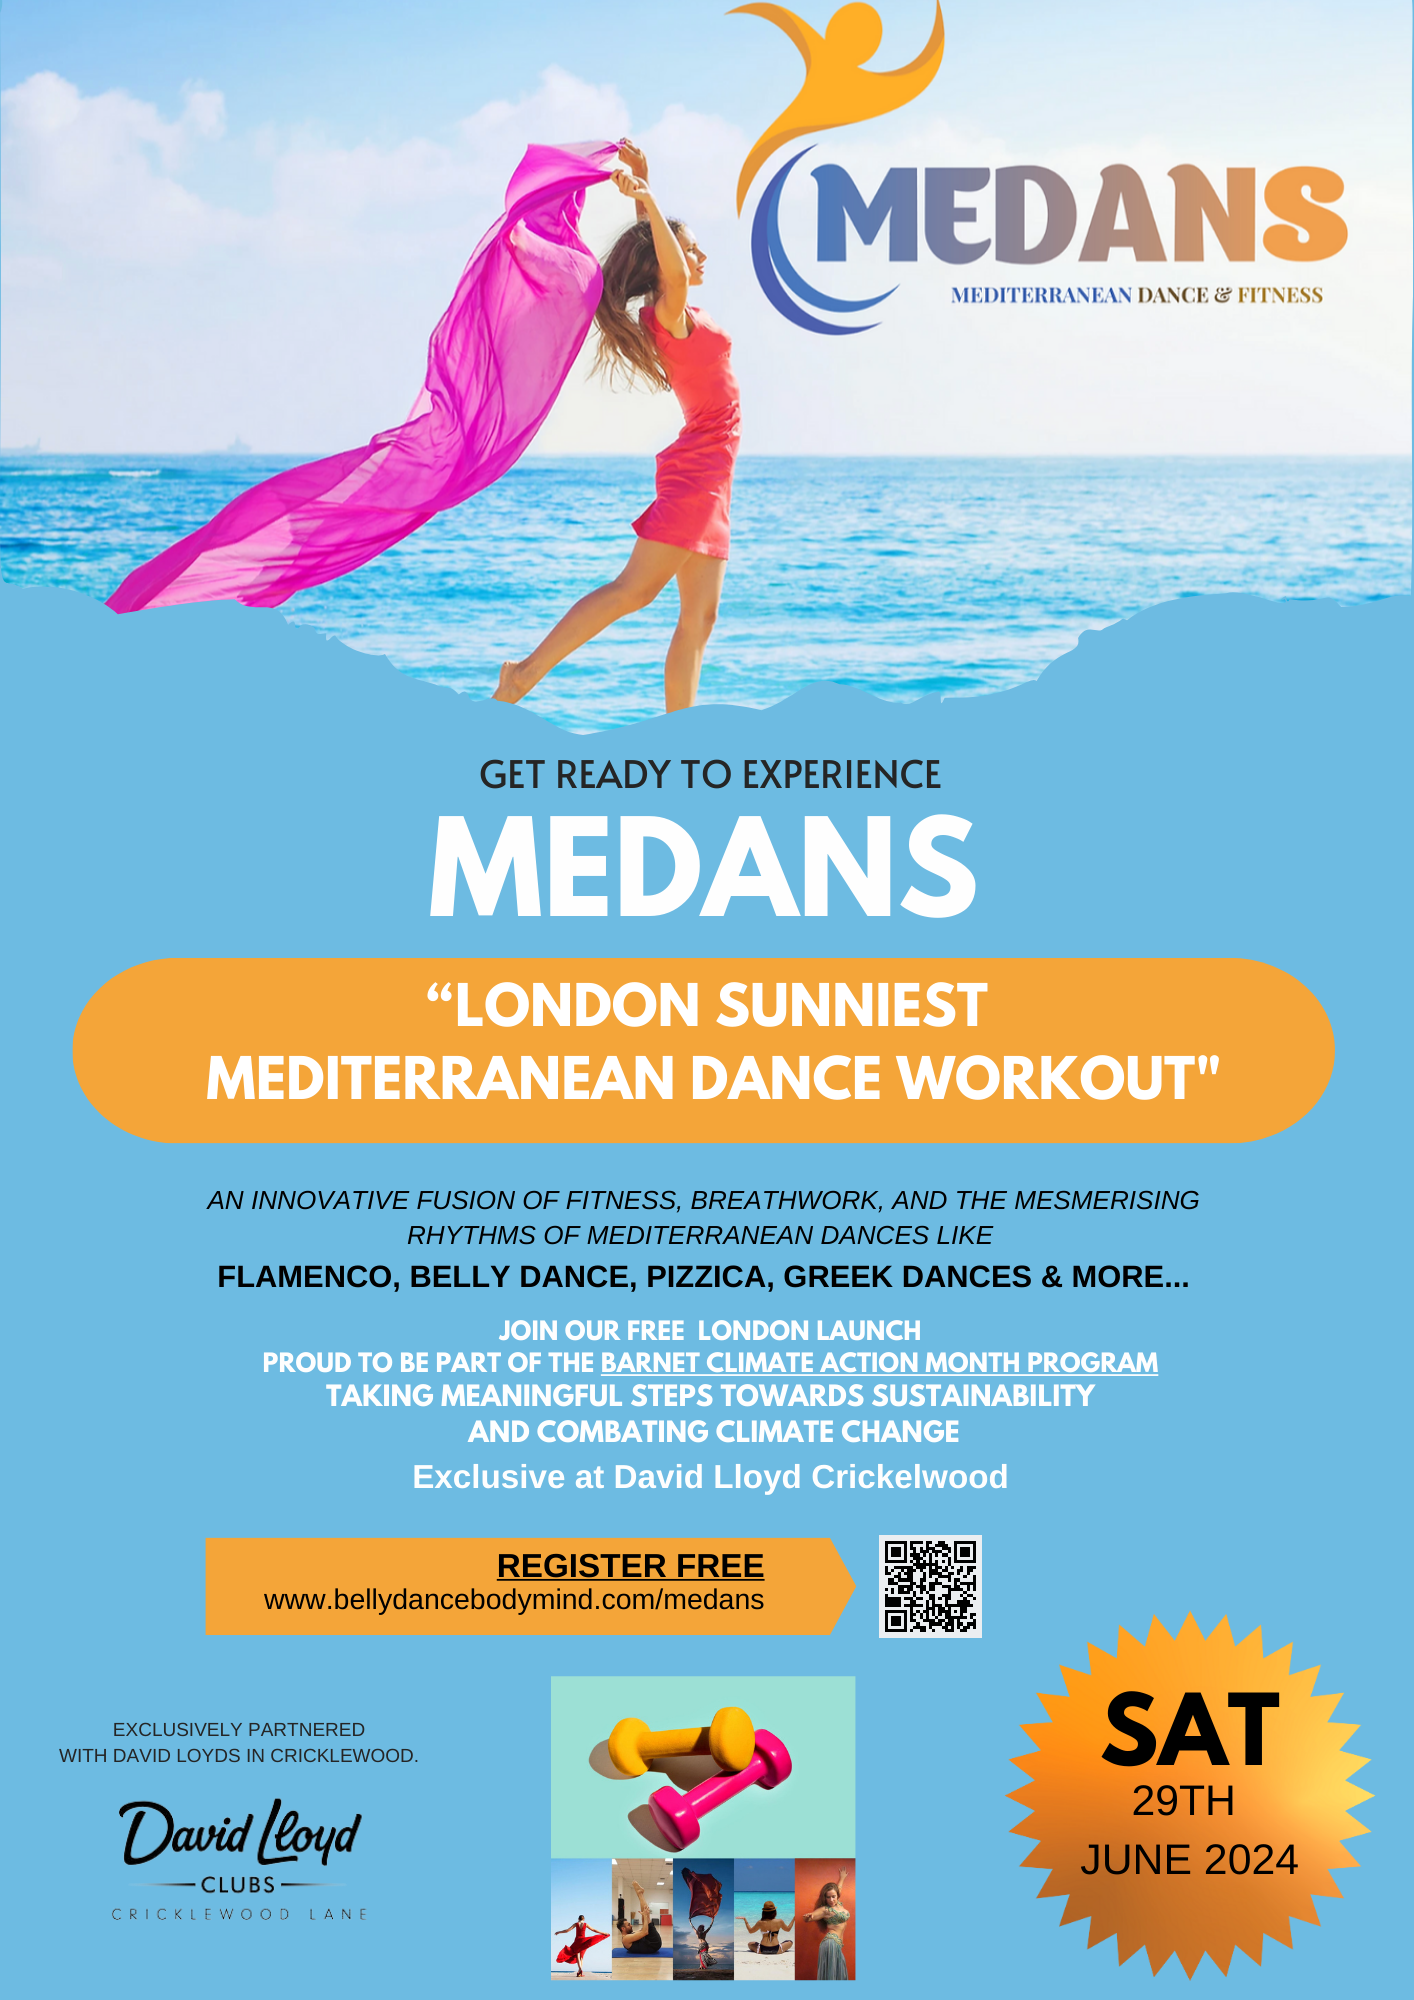 London's Sunniest Mediterranean Dance Workout! (1.76 MB)